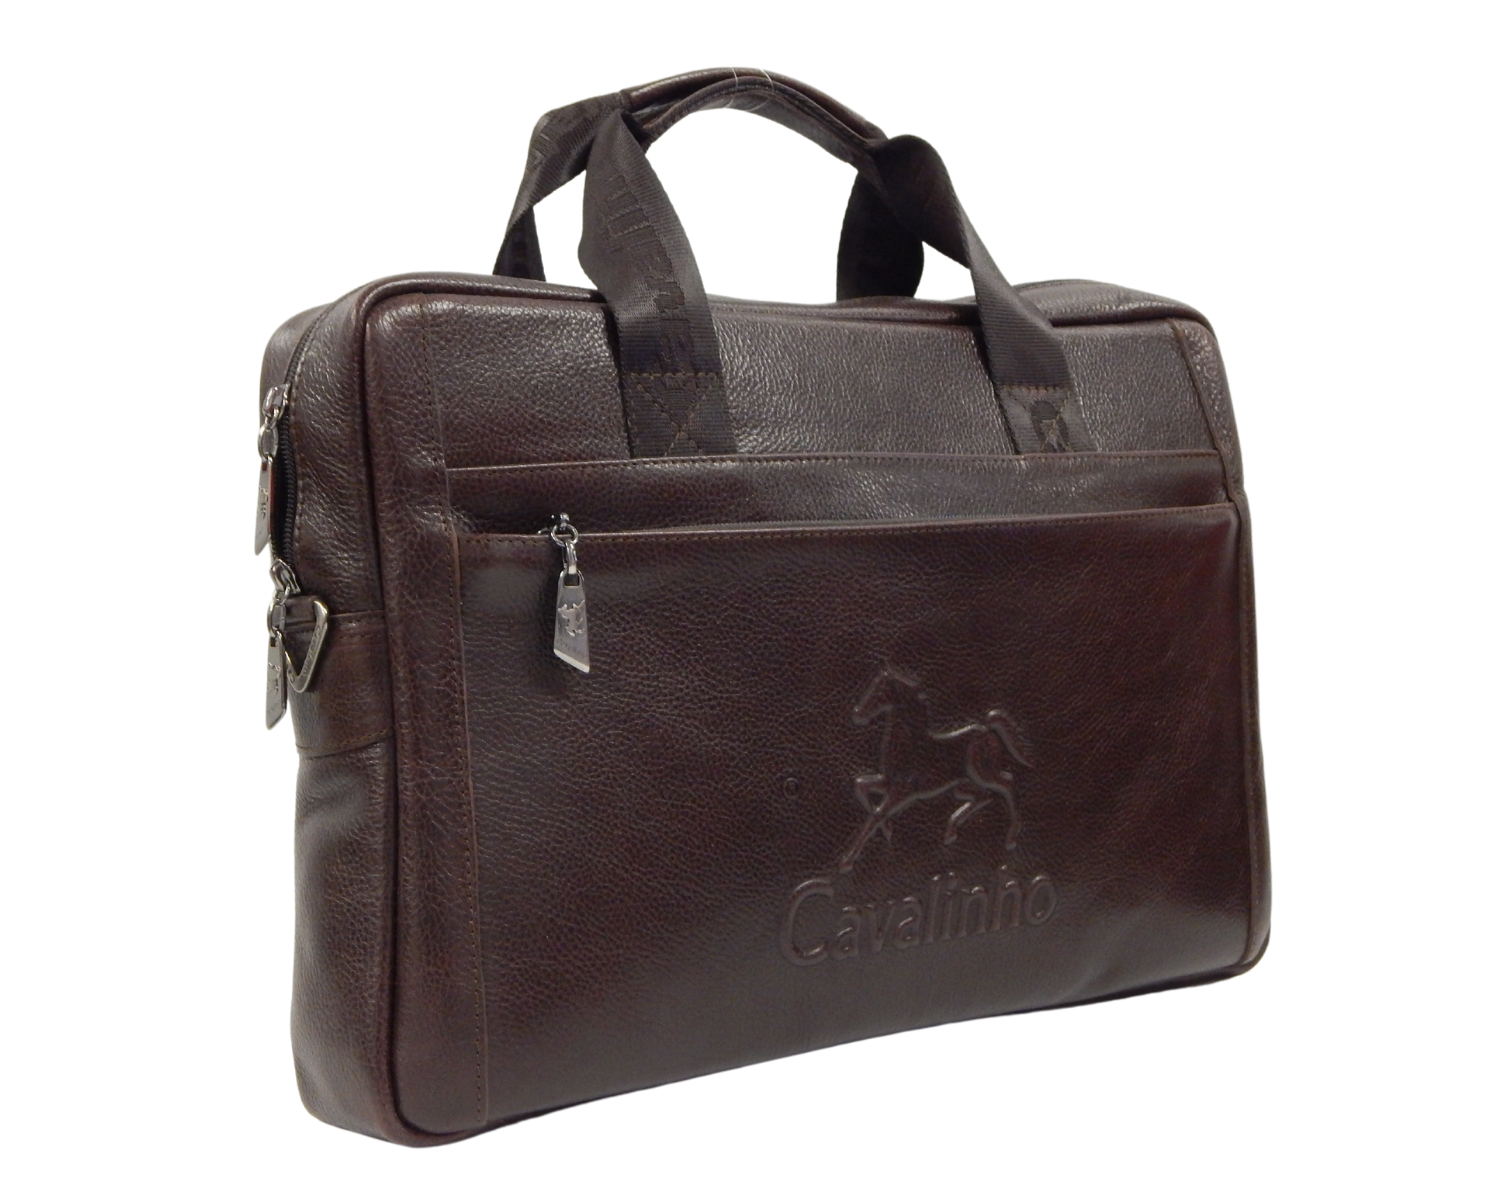 Cavalinho Leather Laptop Bag 17" - Brown - 18320257.02_P02